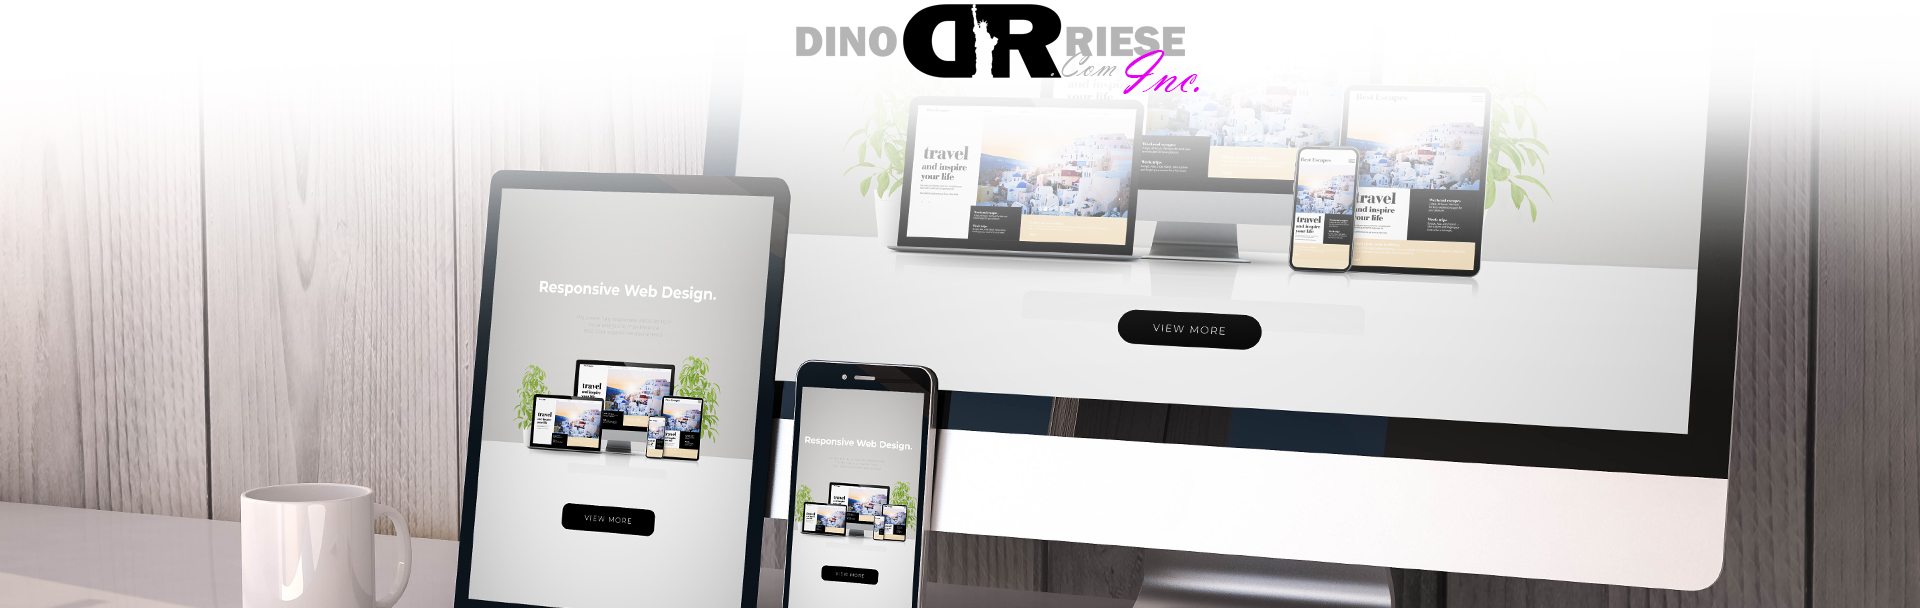 Mobile Responsive Web Design Professional Services  | DinoRiese.com Inc. - Image